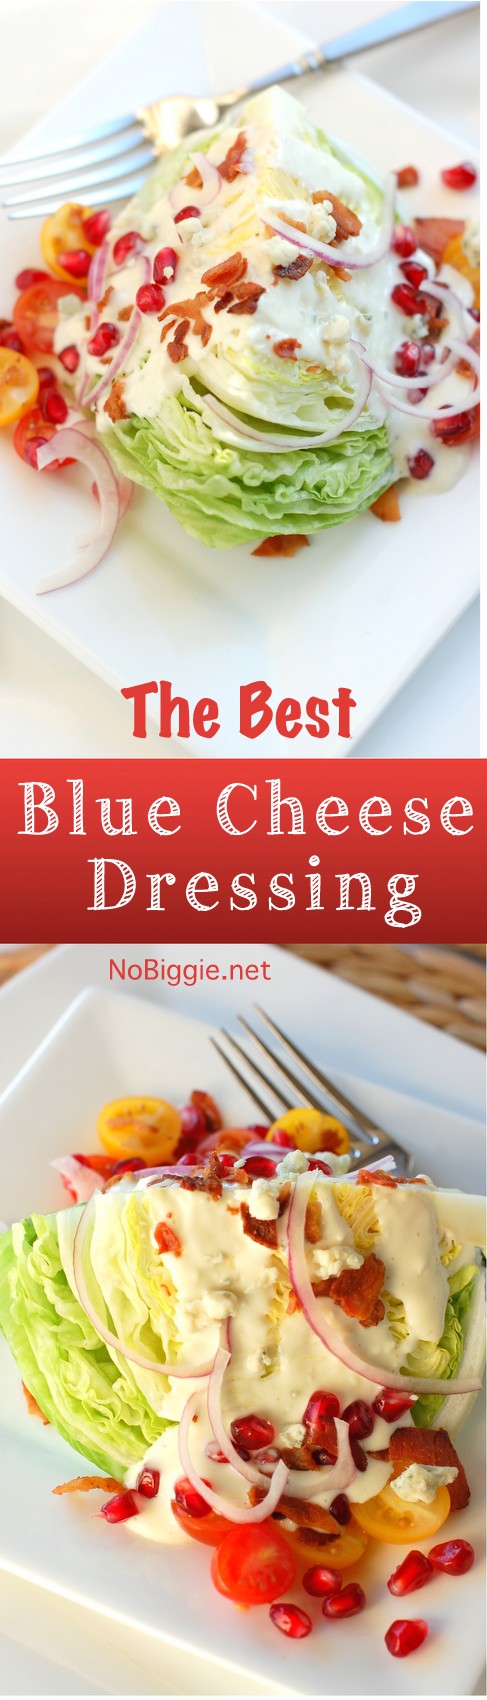 Recipe for the BEST blue cheese dressing | NoBiggie.net